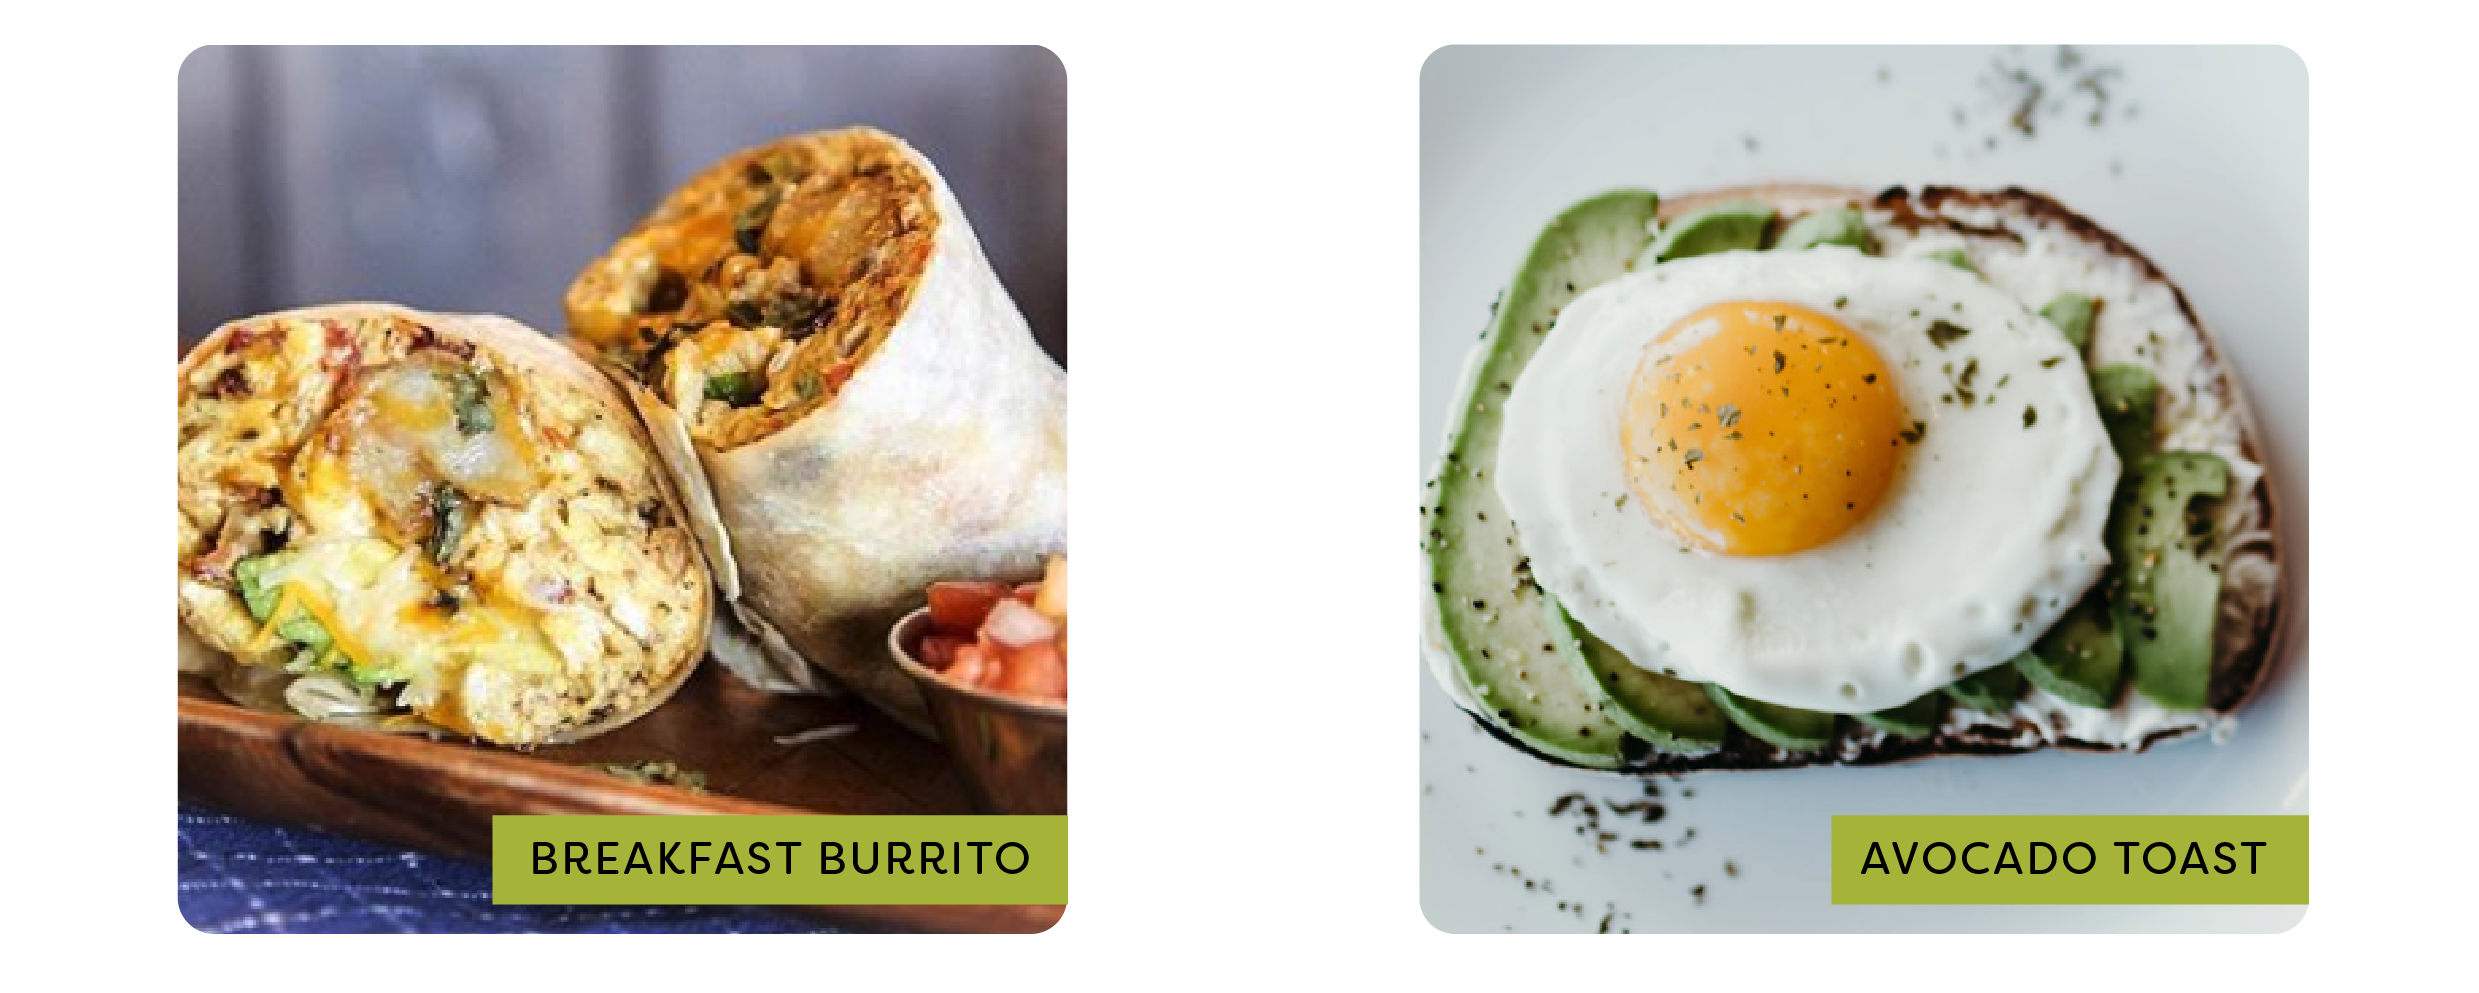 Download PNG image - Breakfast burrito Transparent PNG 